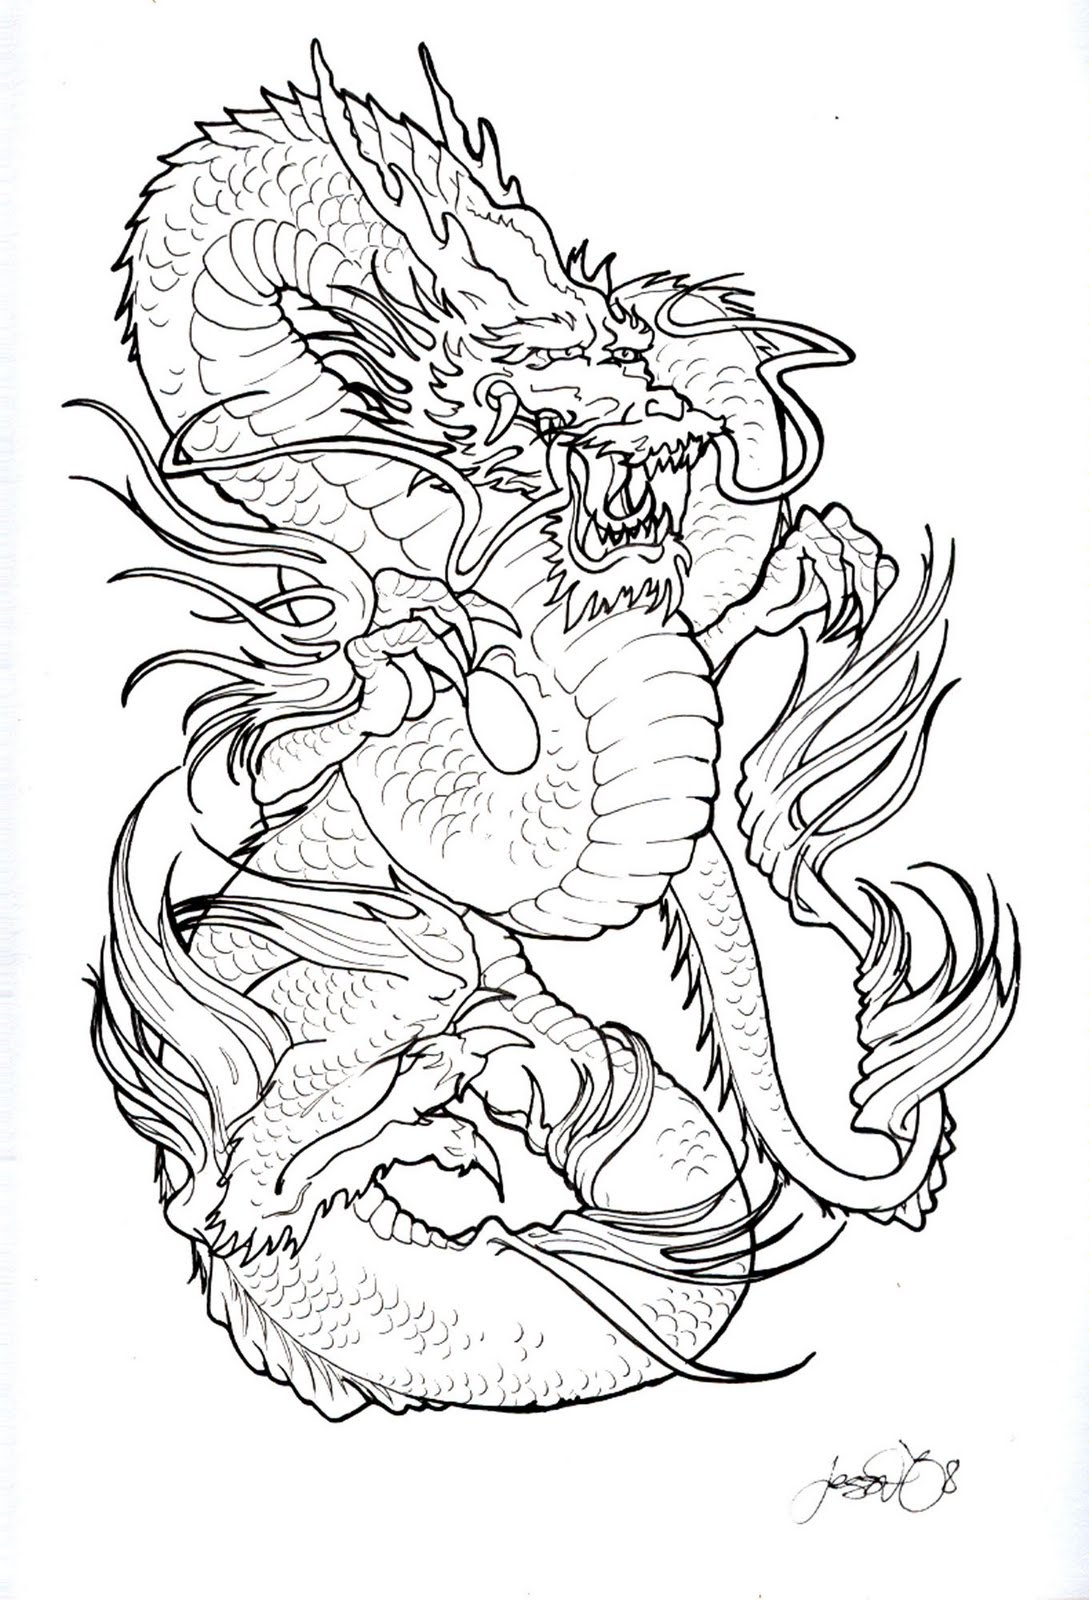 Temporary Tattoo Japanese Dragon Irezumi Tattoos Art Waterproof Shoulder  Sticker | eBay